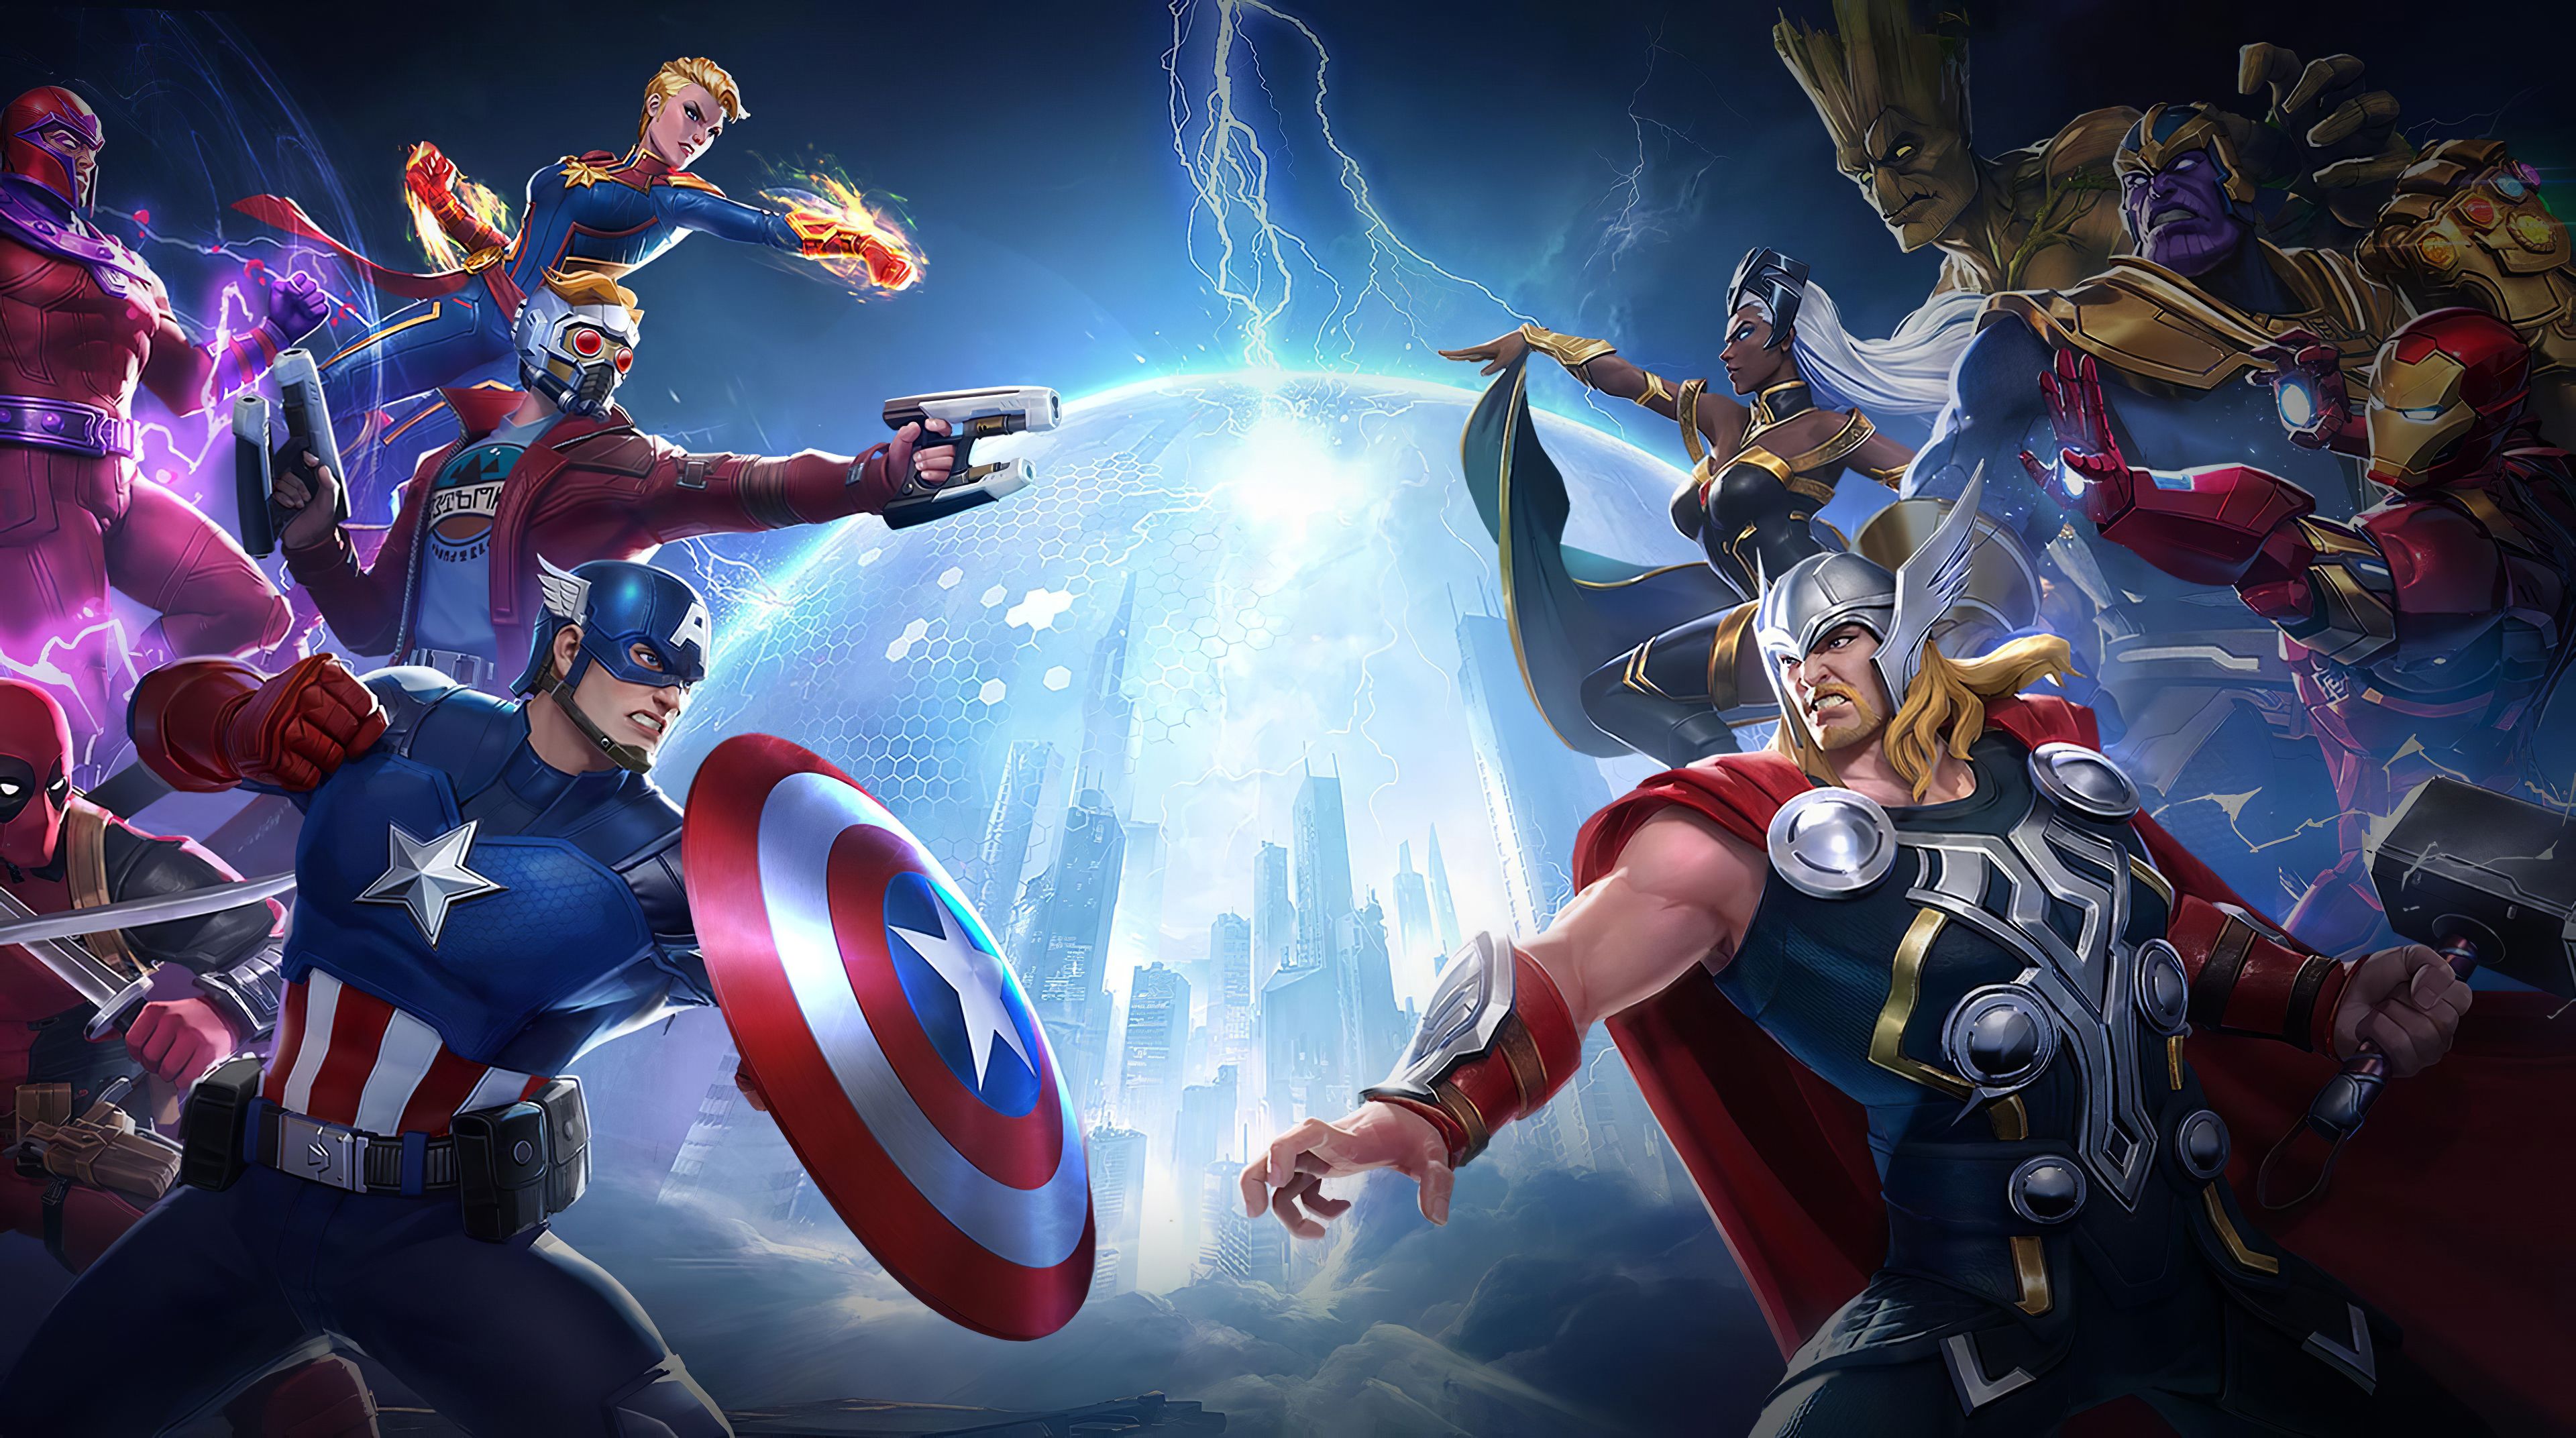 4k Marvel Super War, HD Games, 4k Wallpaper, Image, Background, Photo and Picture